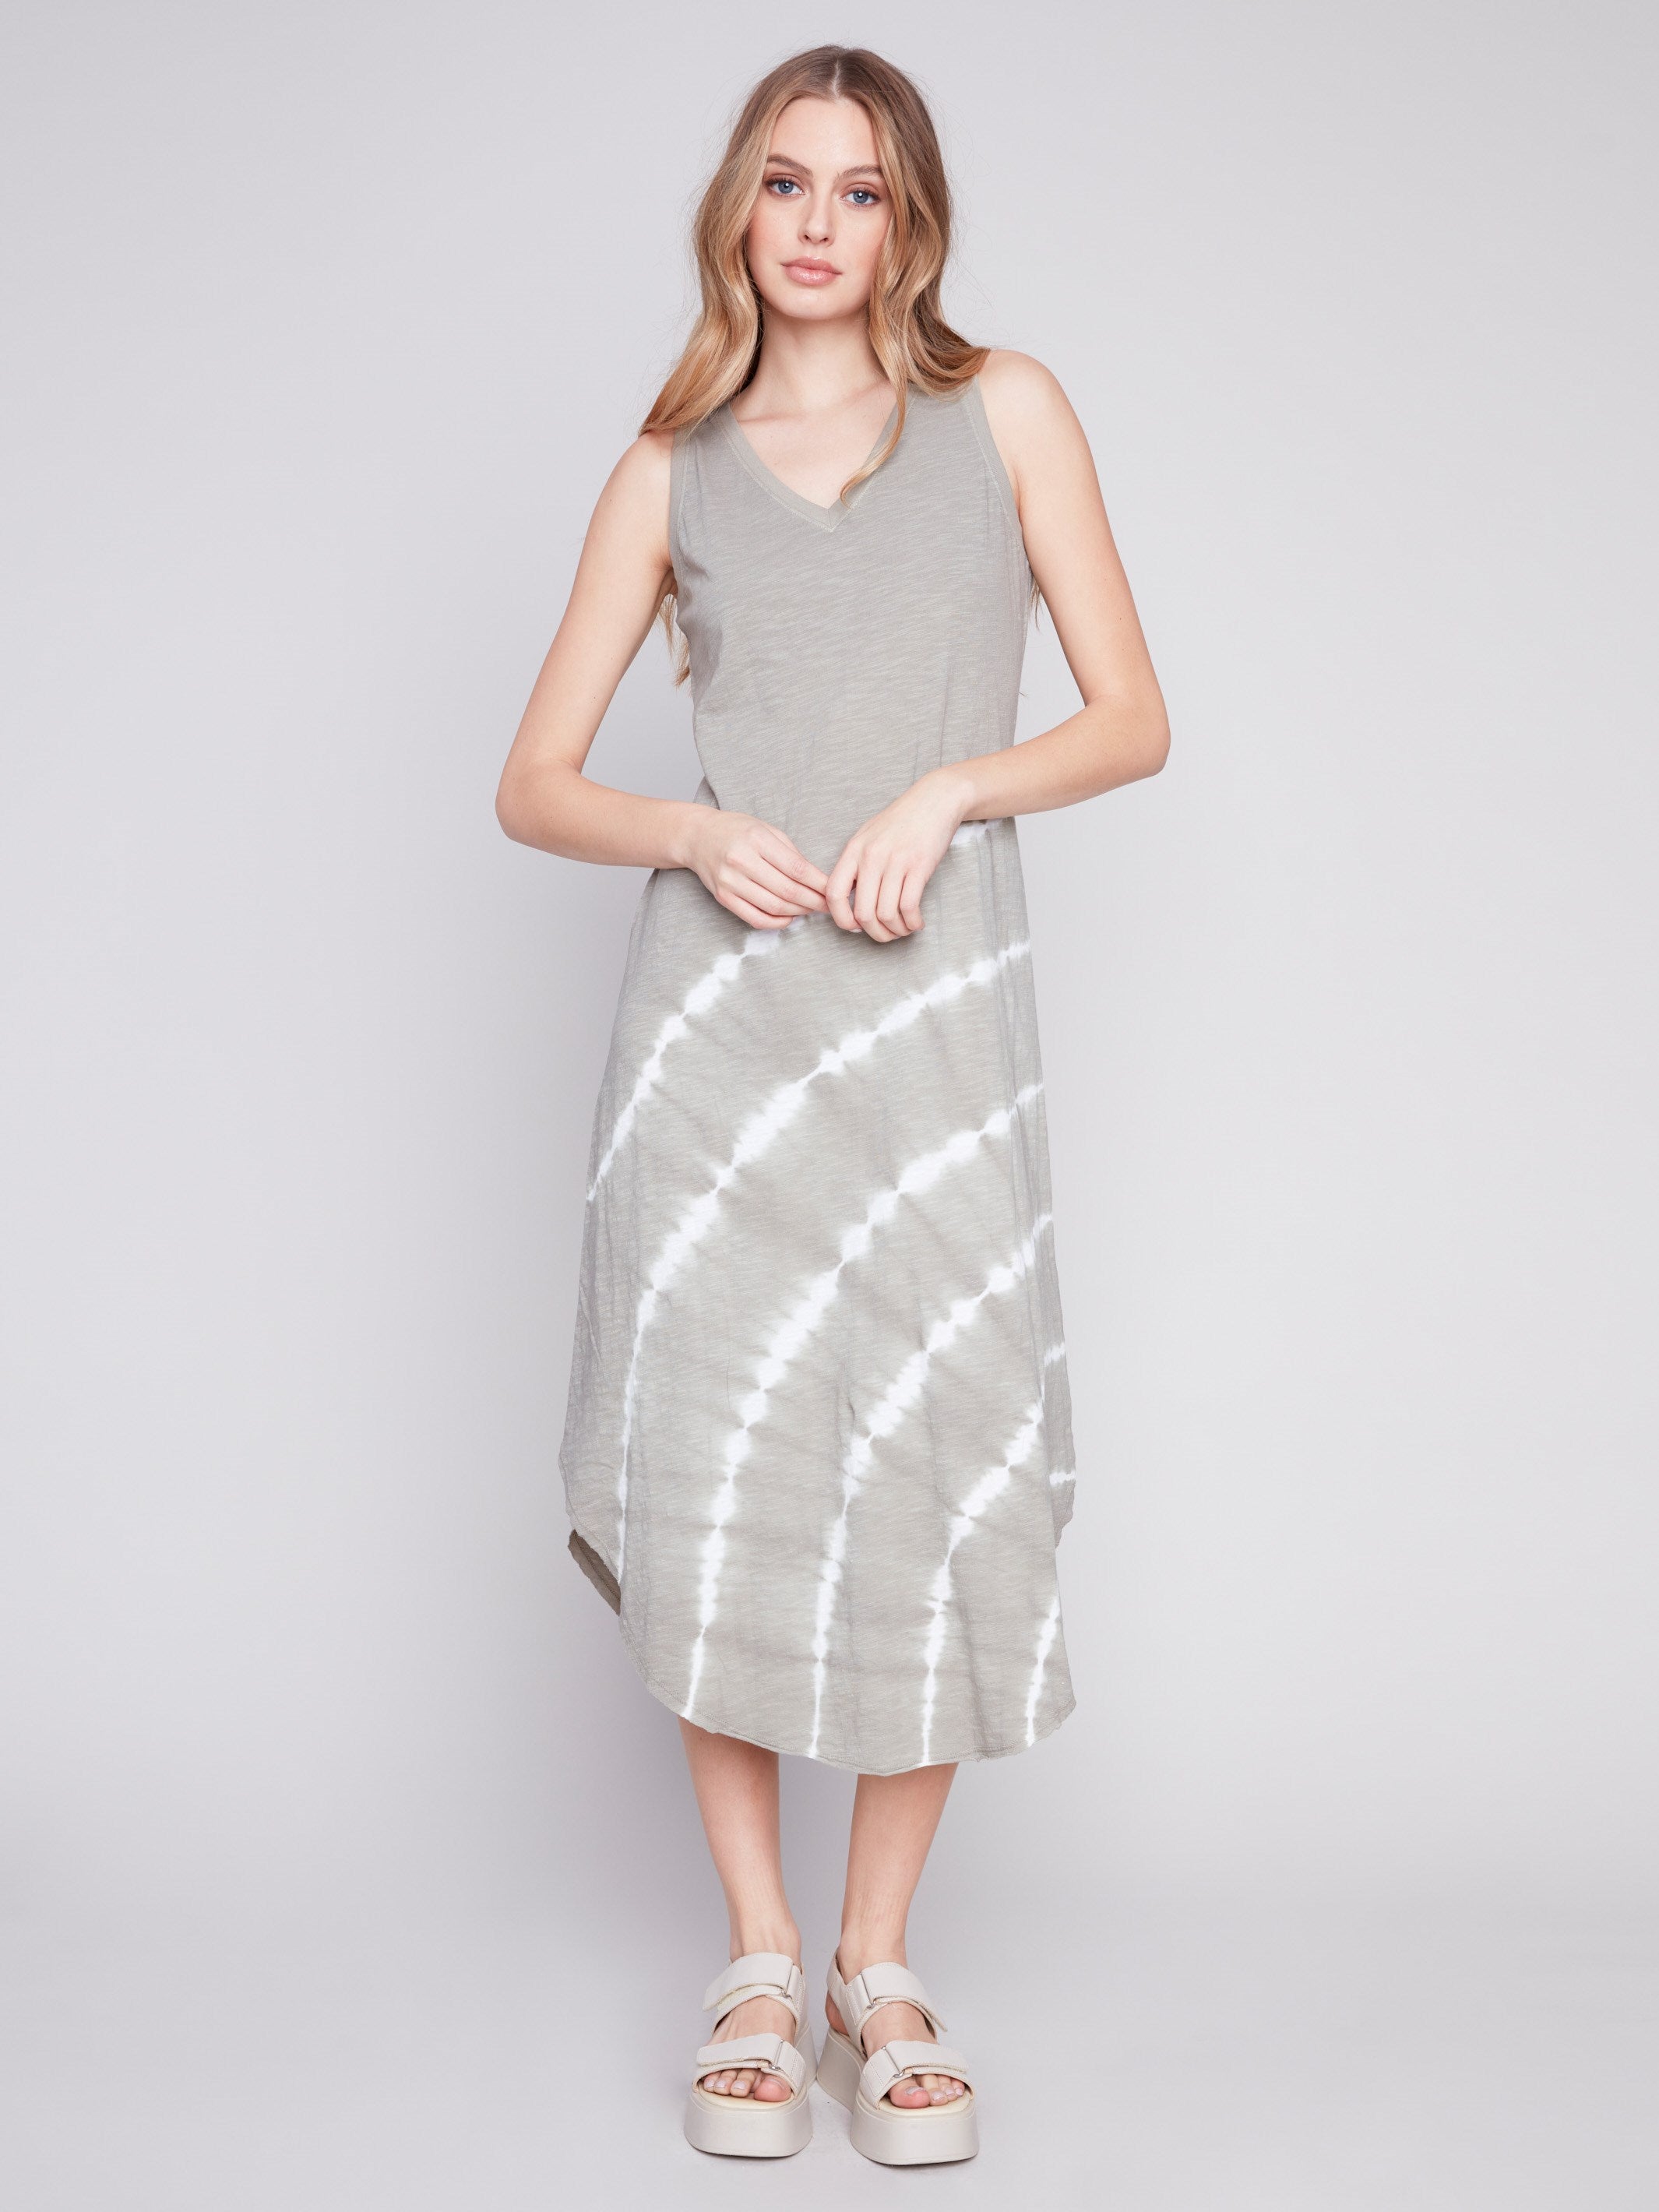 Charlie B Printed Sleeveless Cotton Dress - Celadon - Image 4